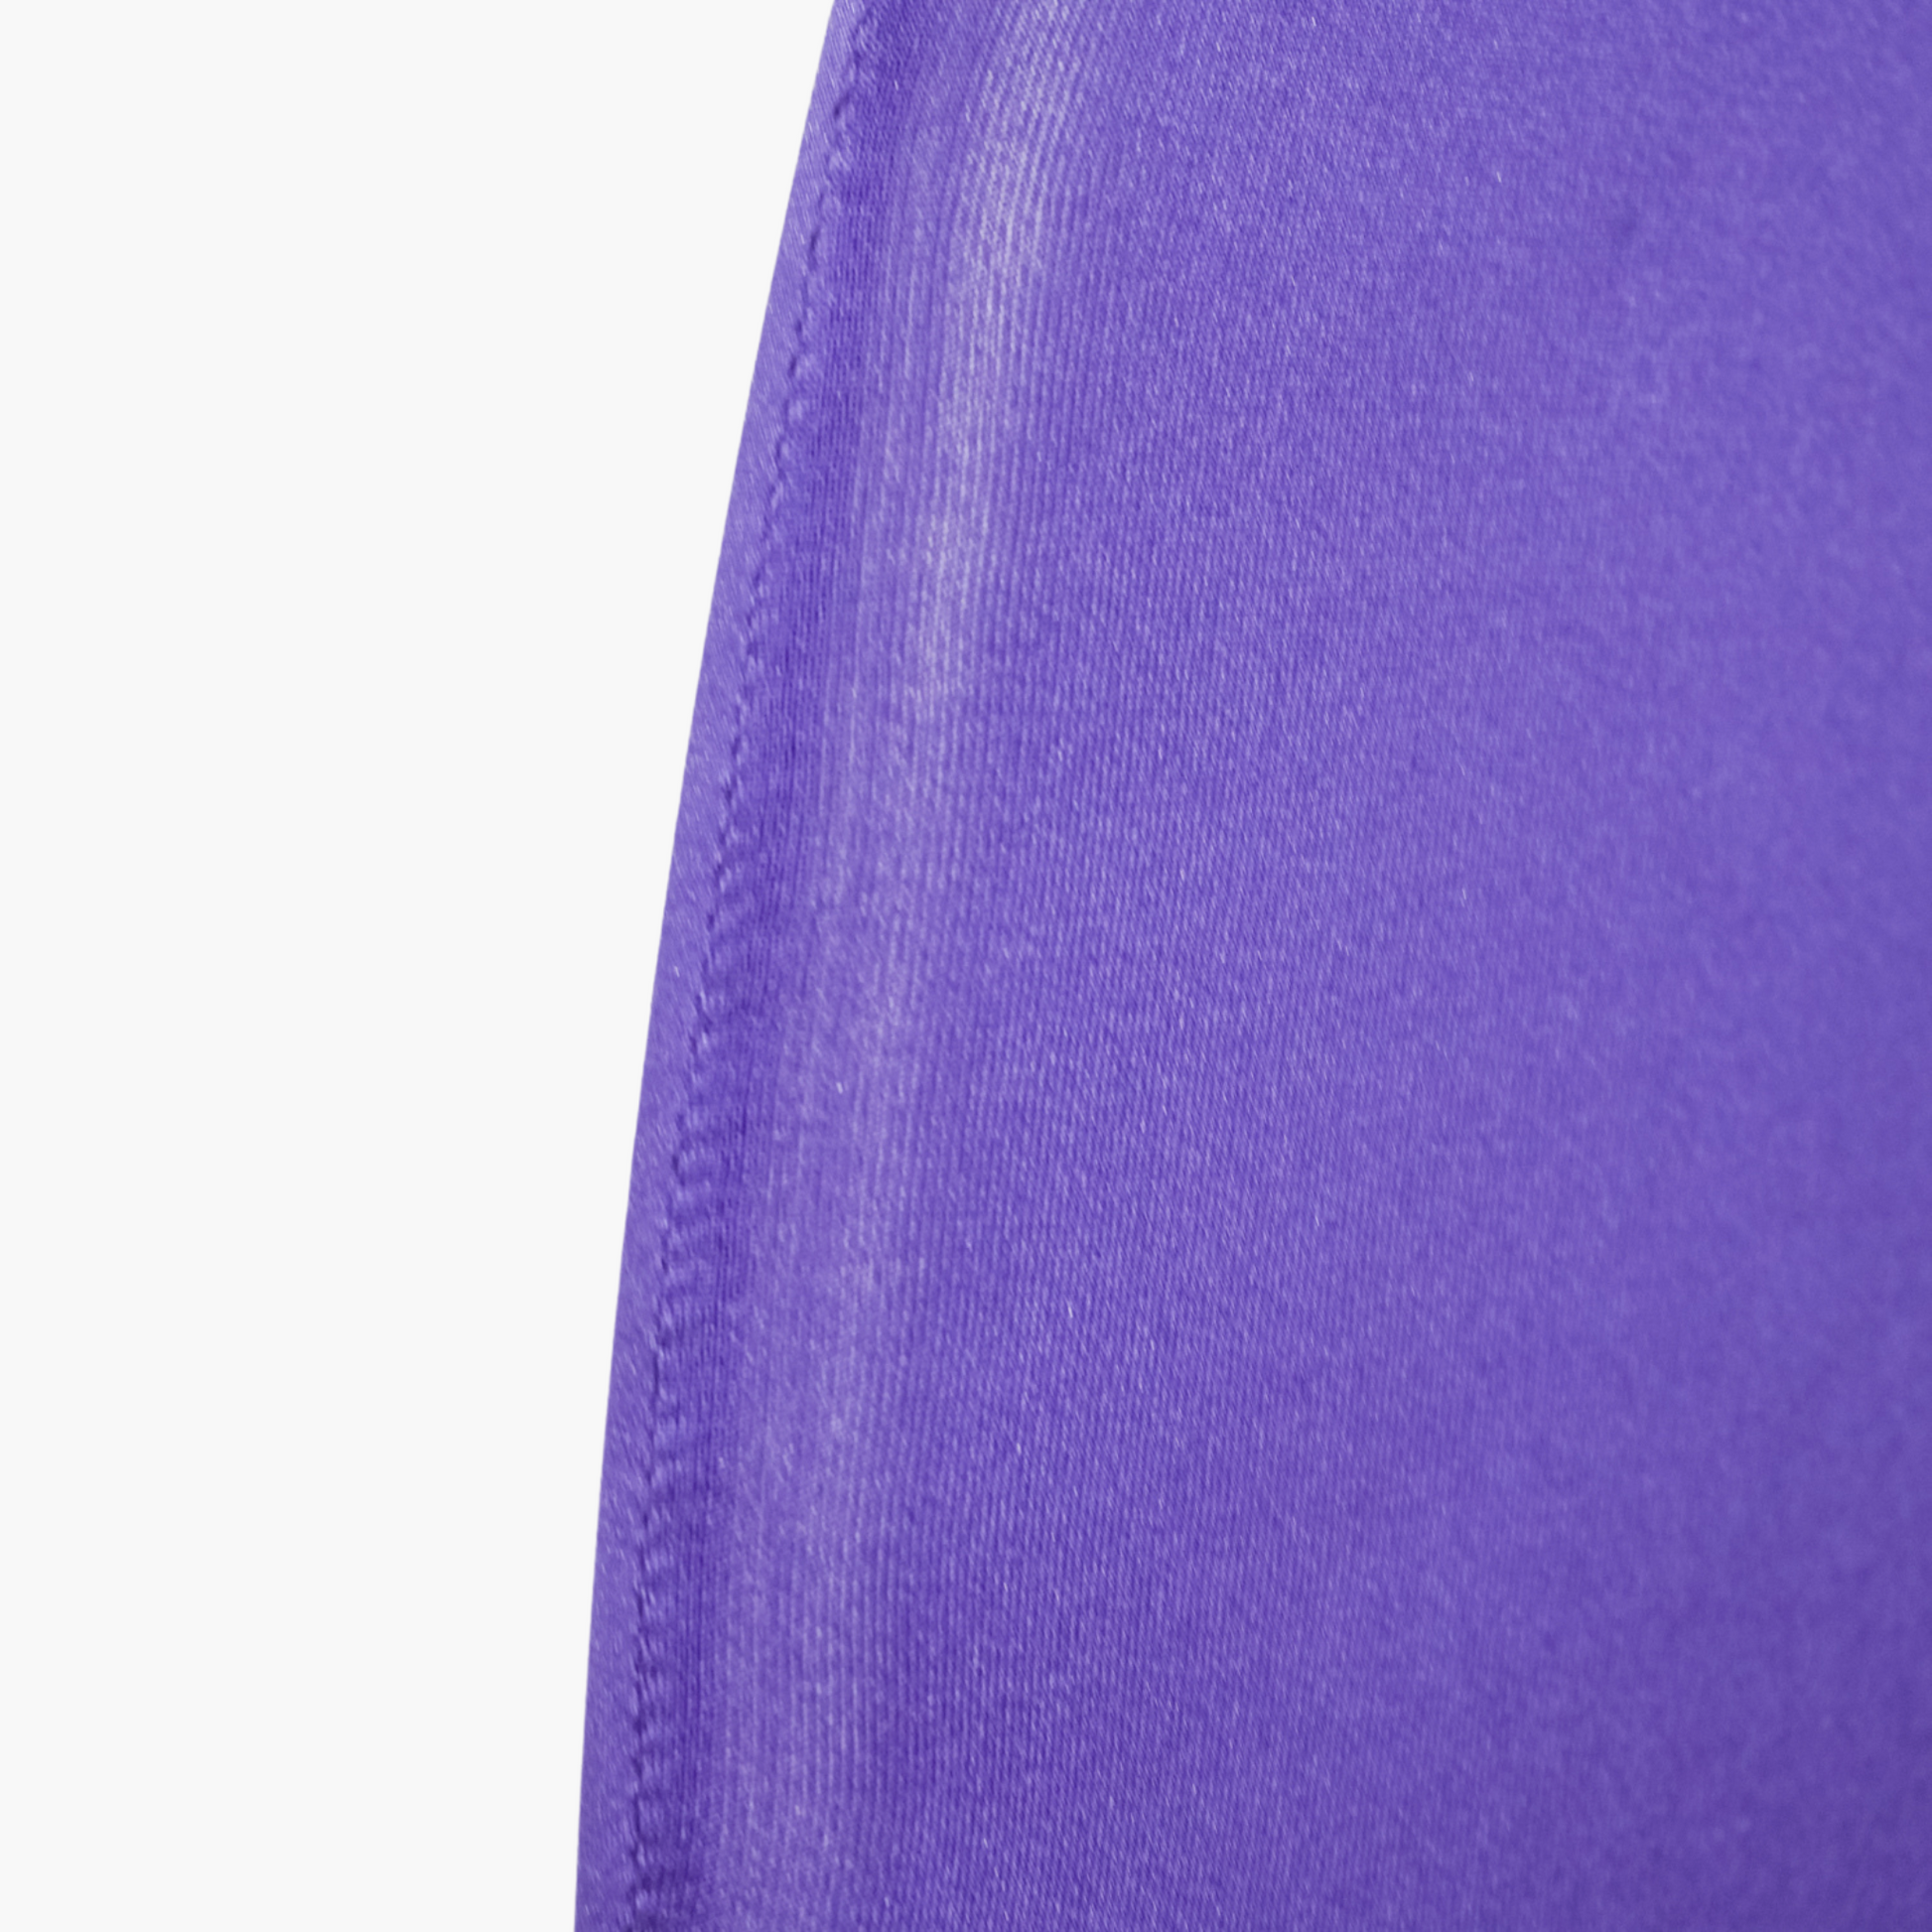 Spandex Arch Covers for Heavy Duty Chiara Frame Backdrop 3pc/set - Purple